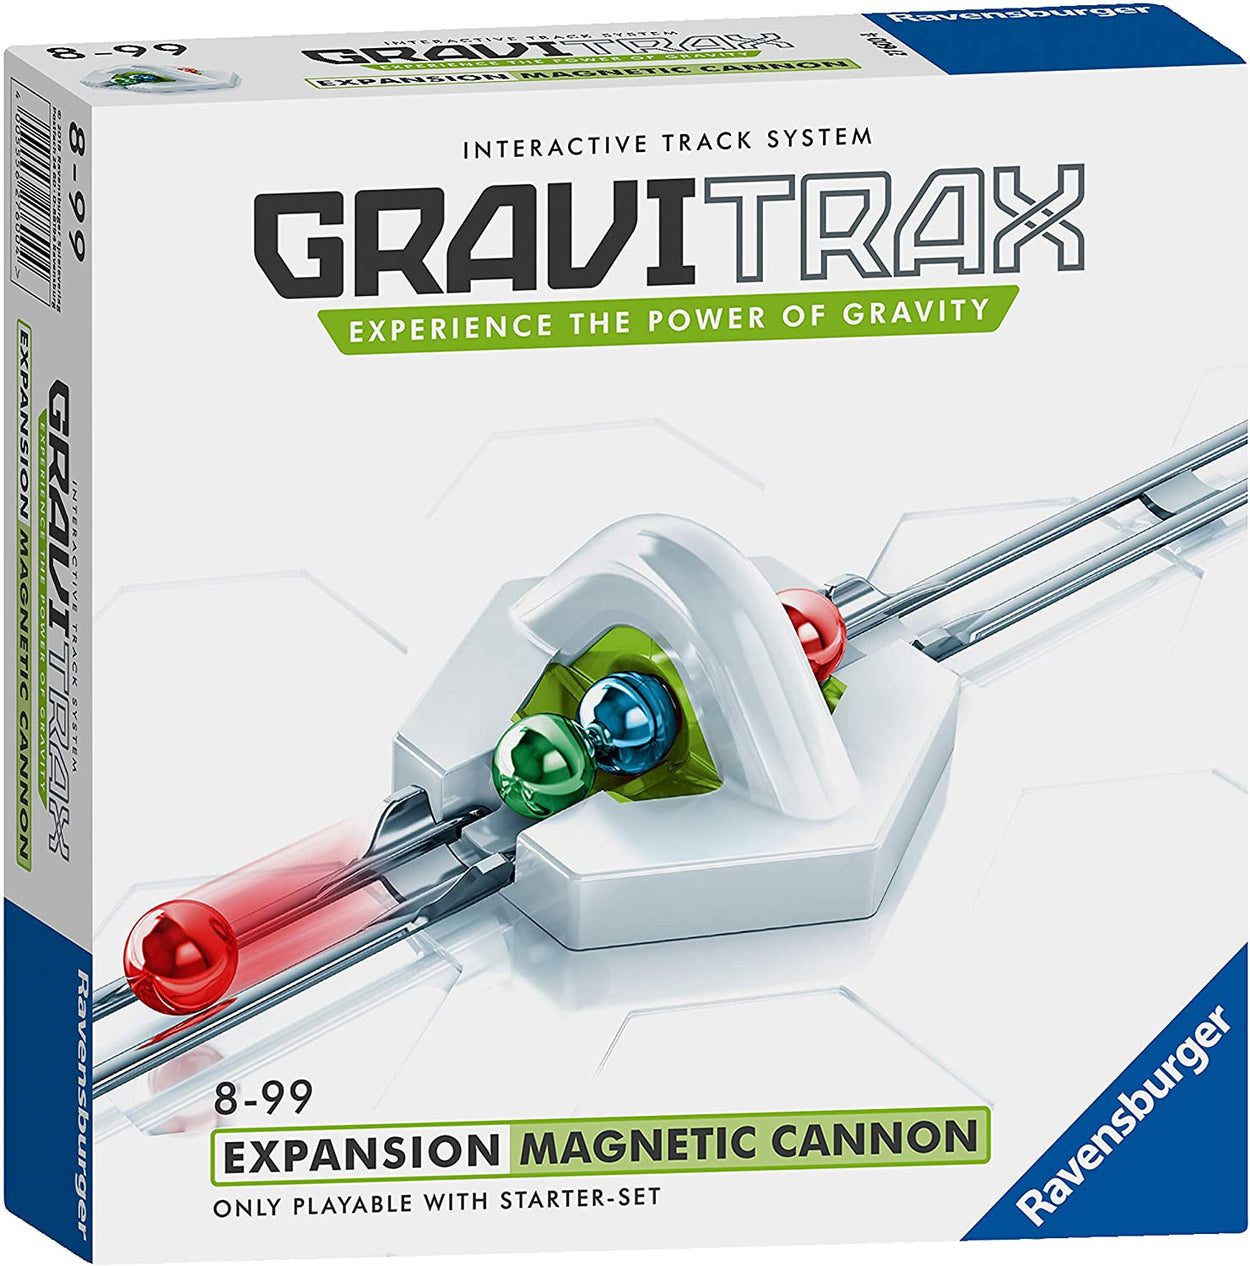 Gravitrax Trampoline Expansion